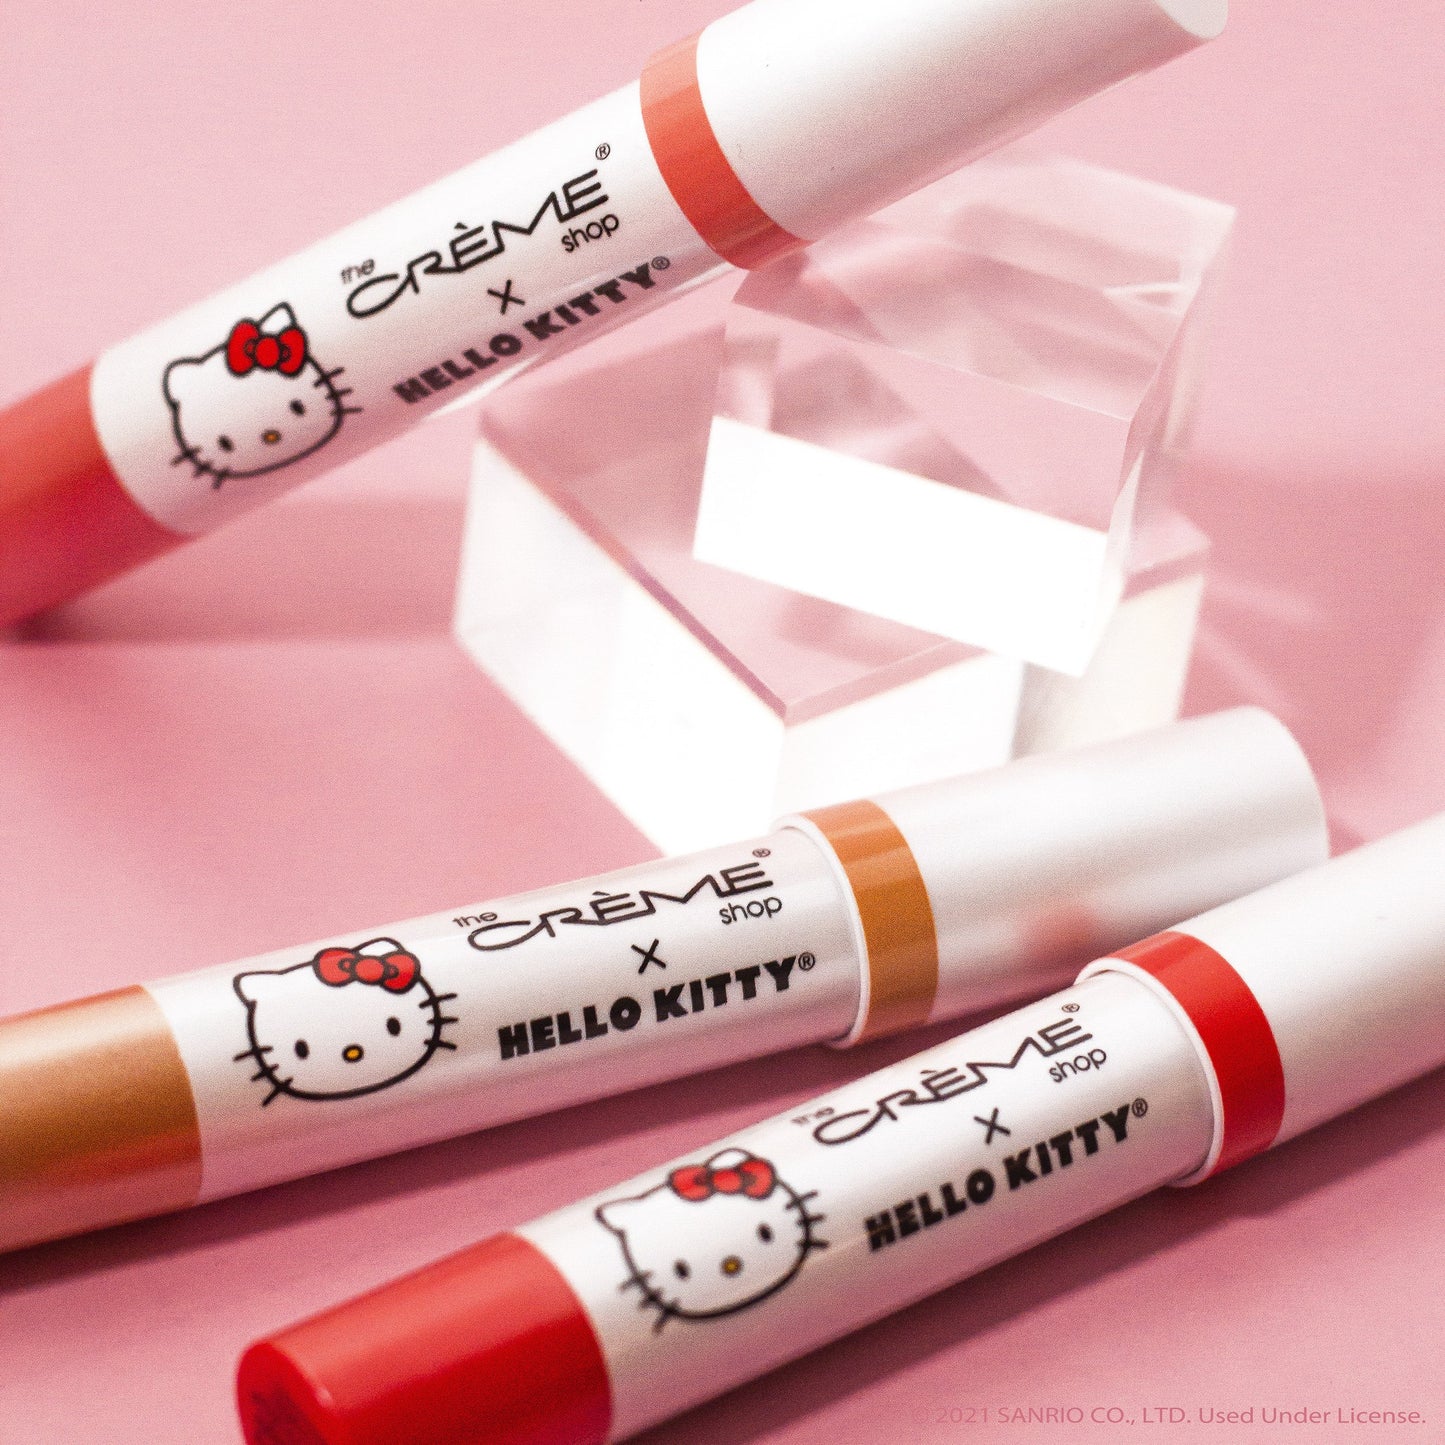 “HELLO LIPPY” Moisturizing Tinted Lip Balm | Peach Pout Lip Balms The Crème Shop x Sanrio 